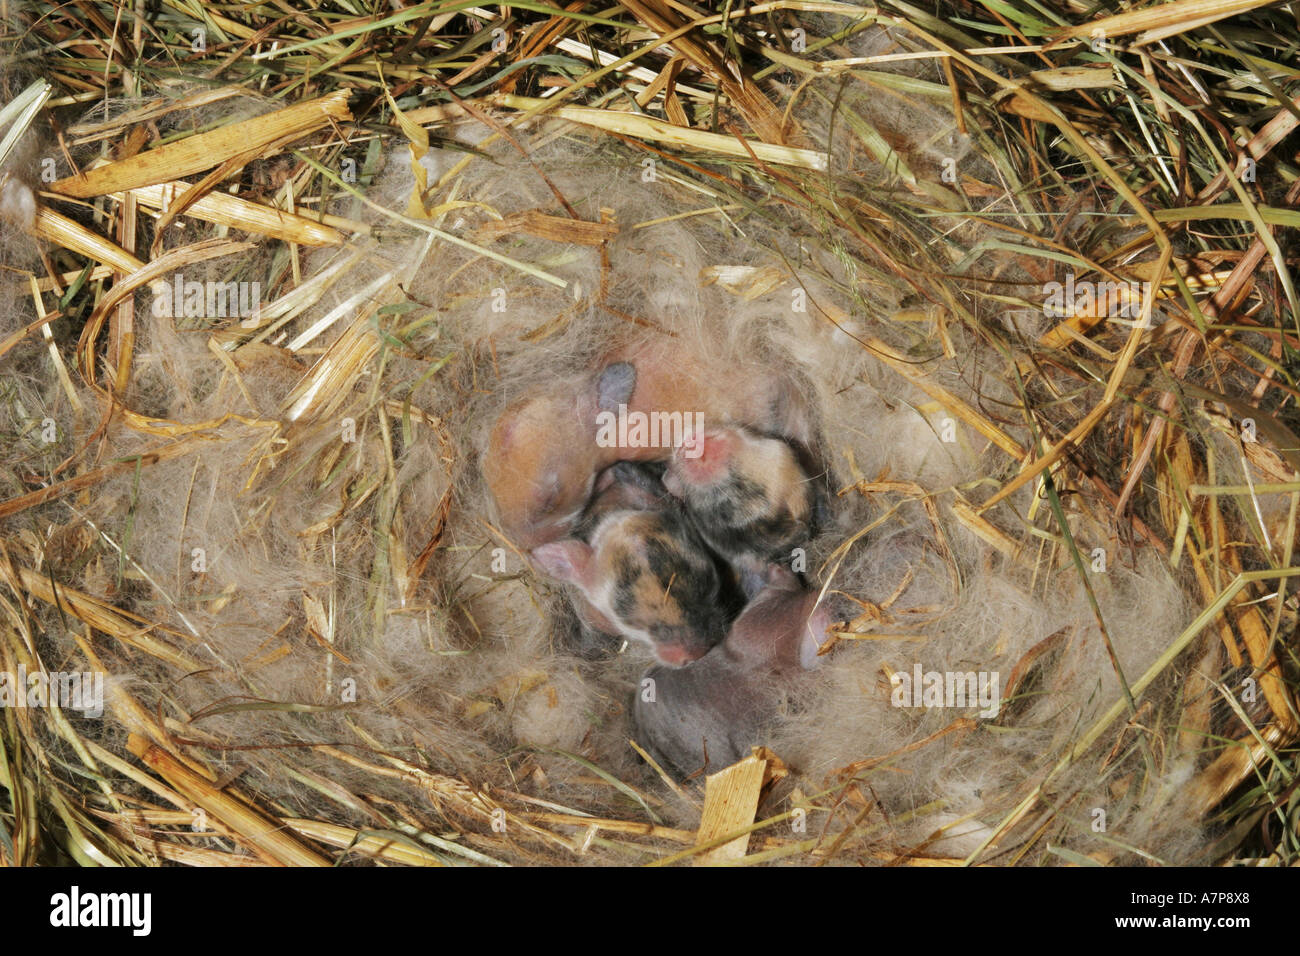 baby rabbits in nest Stock Photo